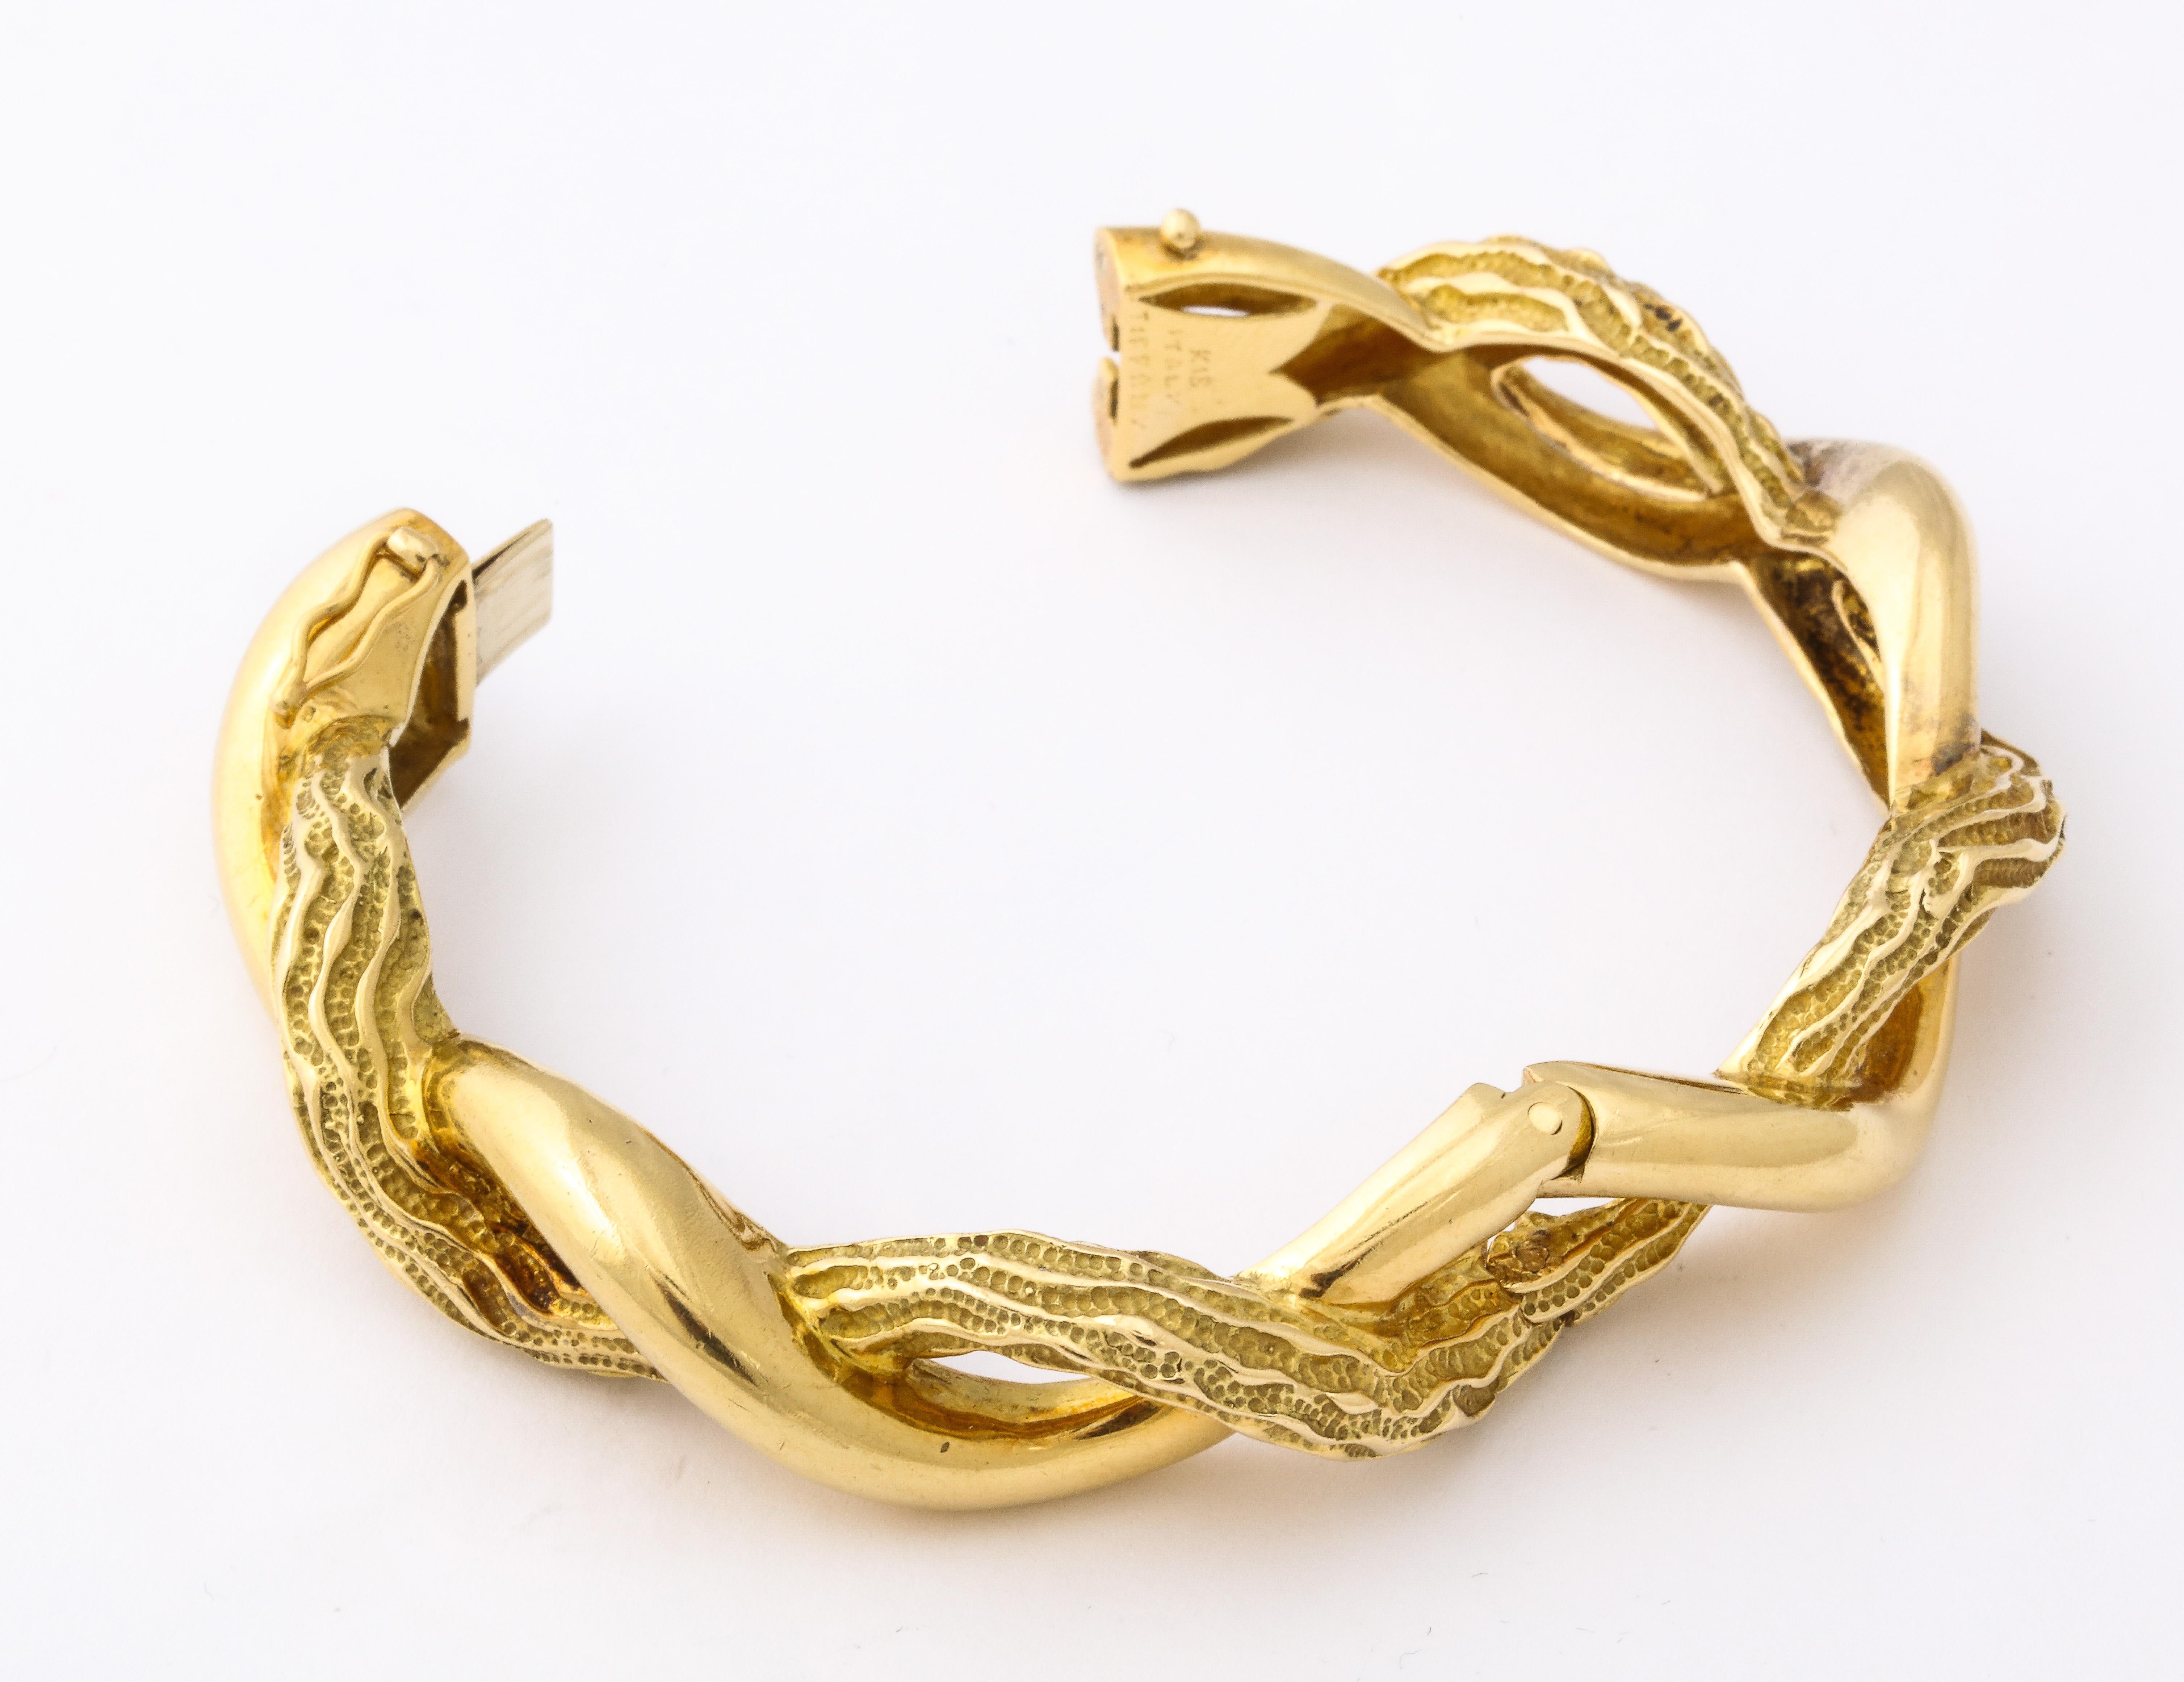 1970s Tiffany & Co. Textured Gold Bangle Bracelet For Sale 1